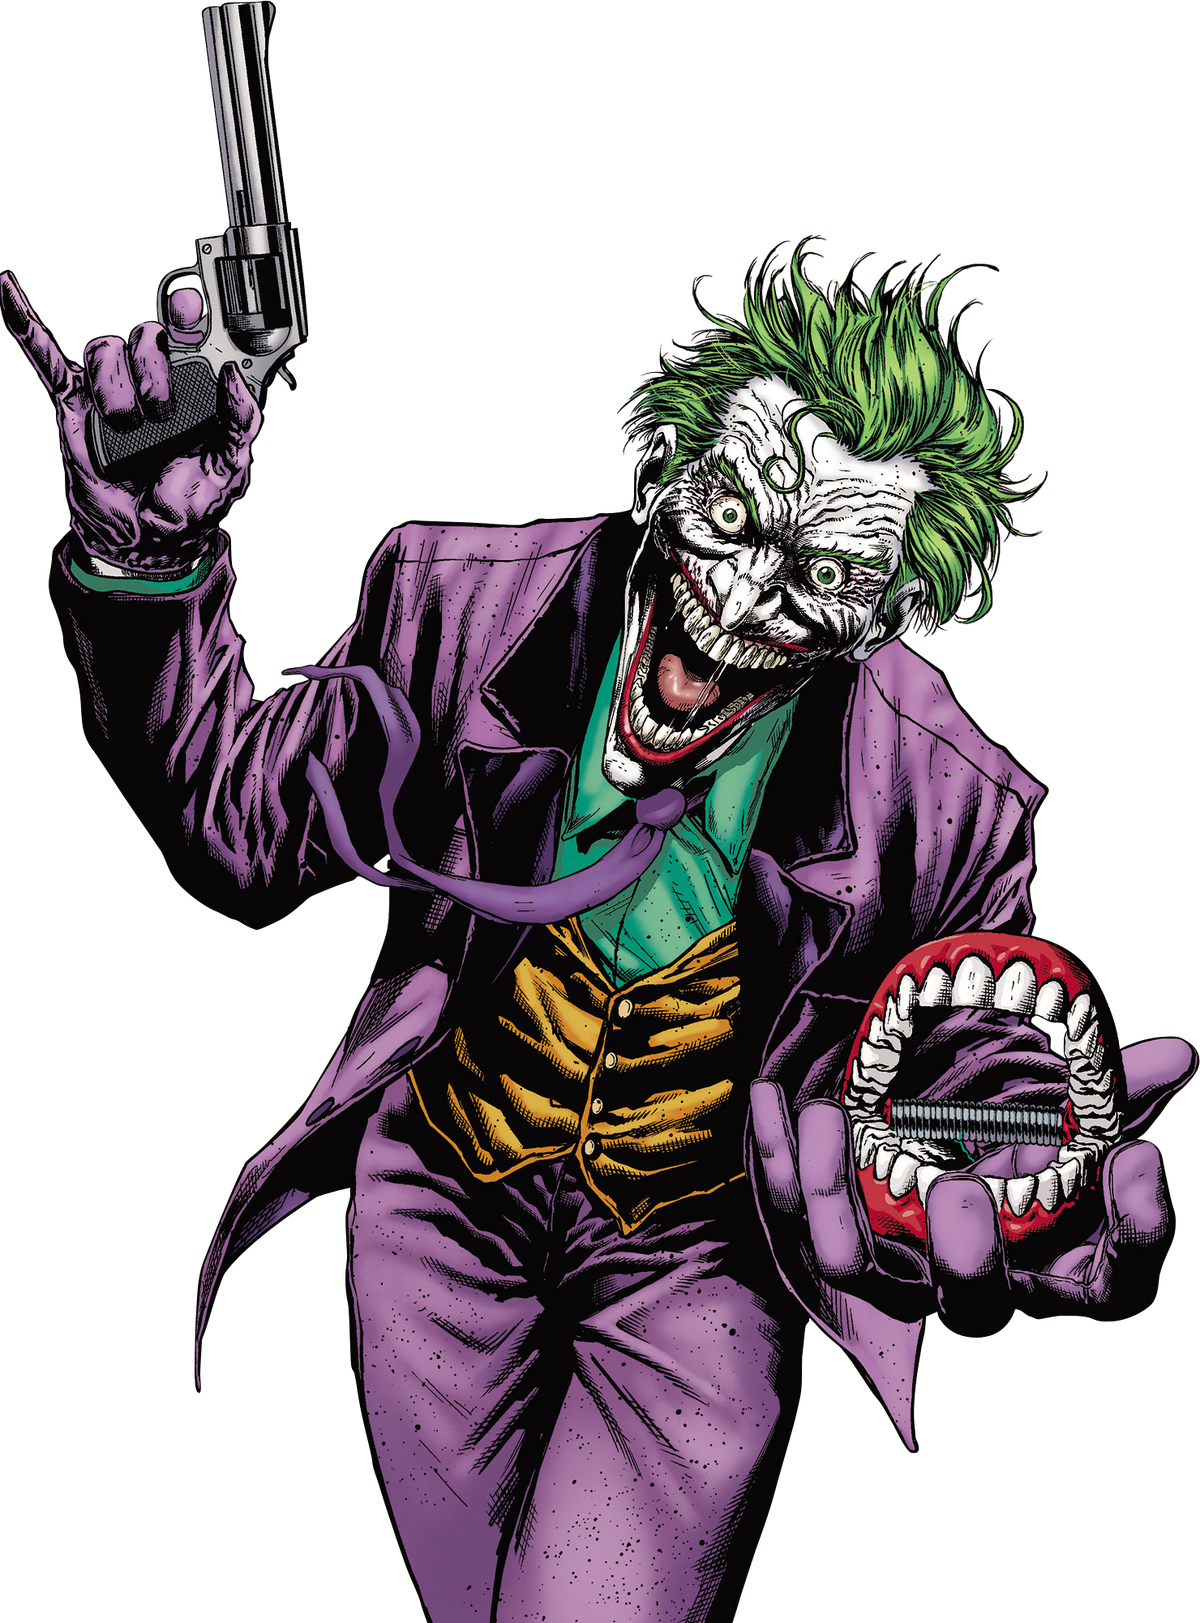 Joker (comics) - Simple English Wikipedia, the free encyclopedia